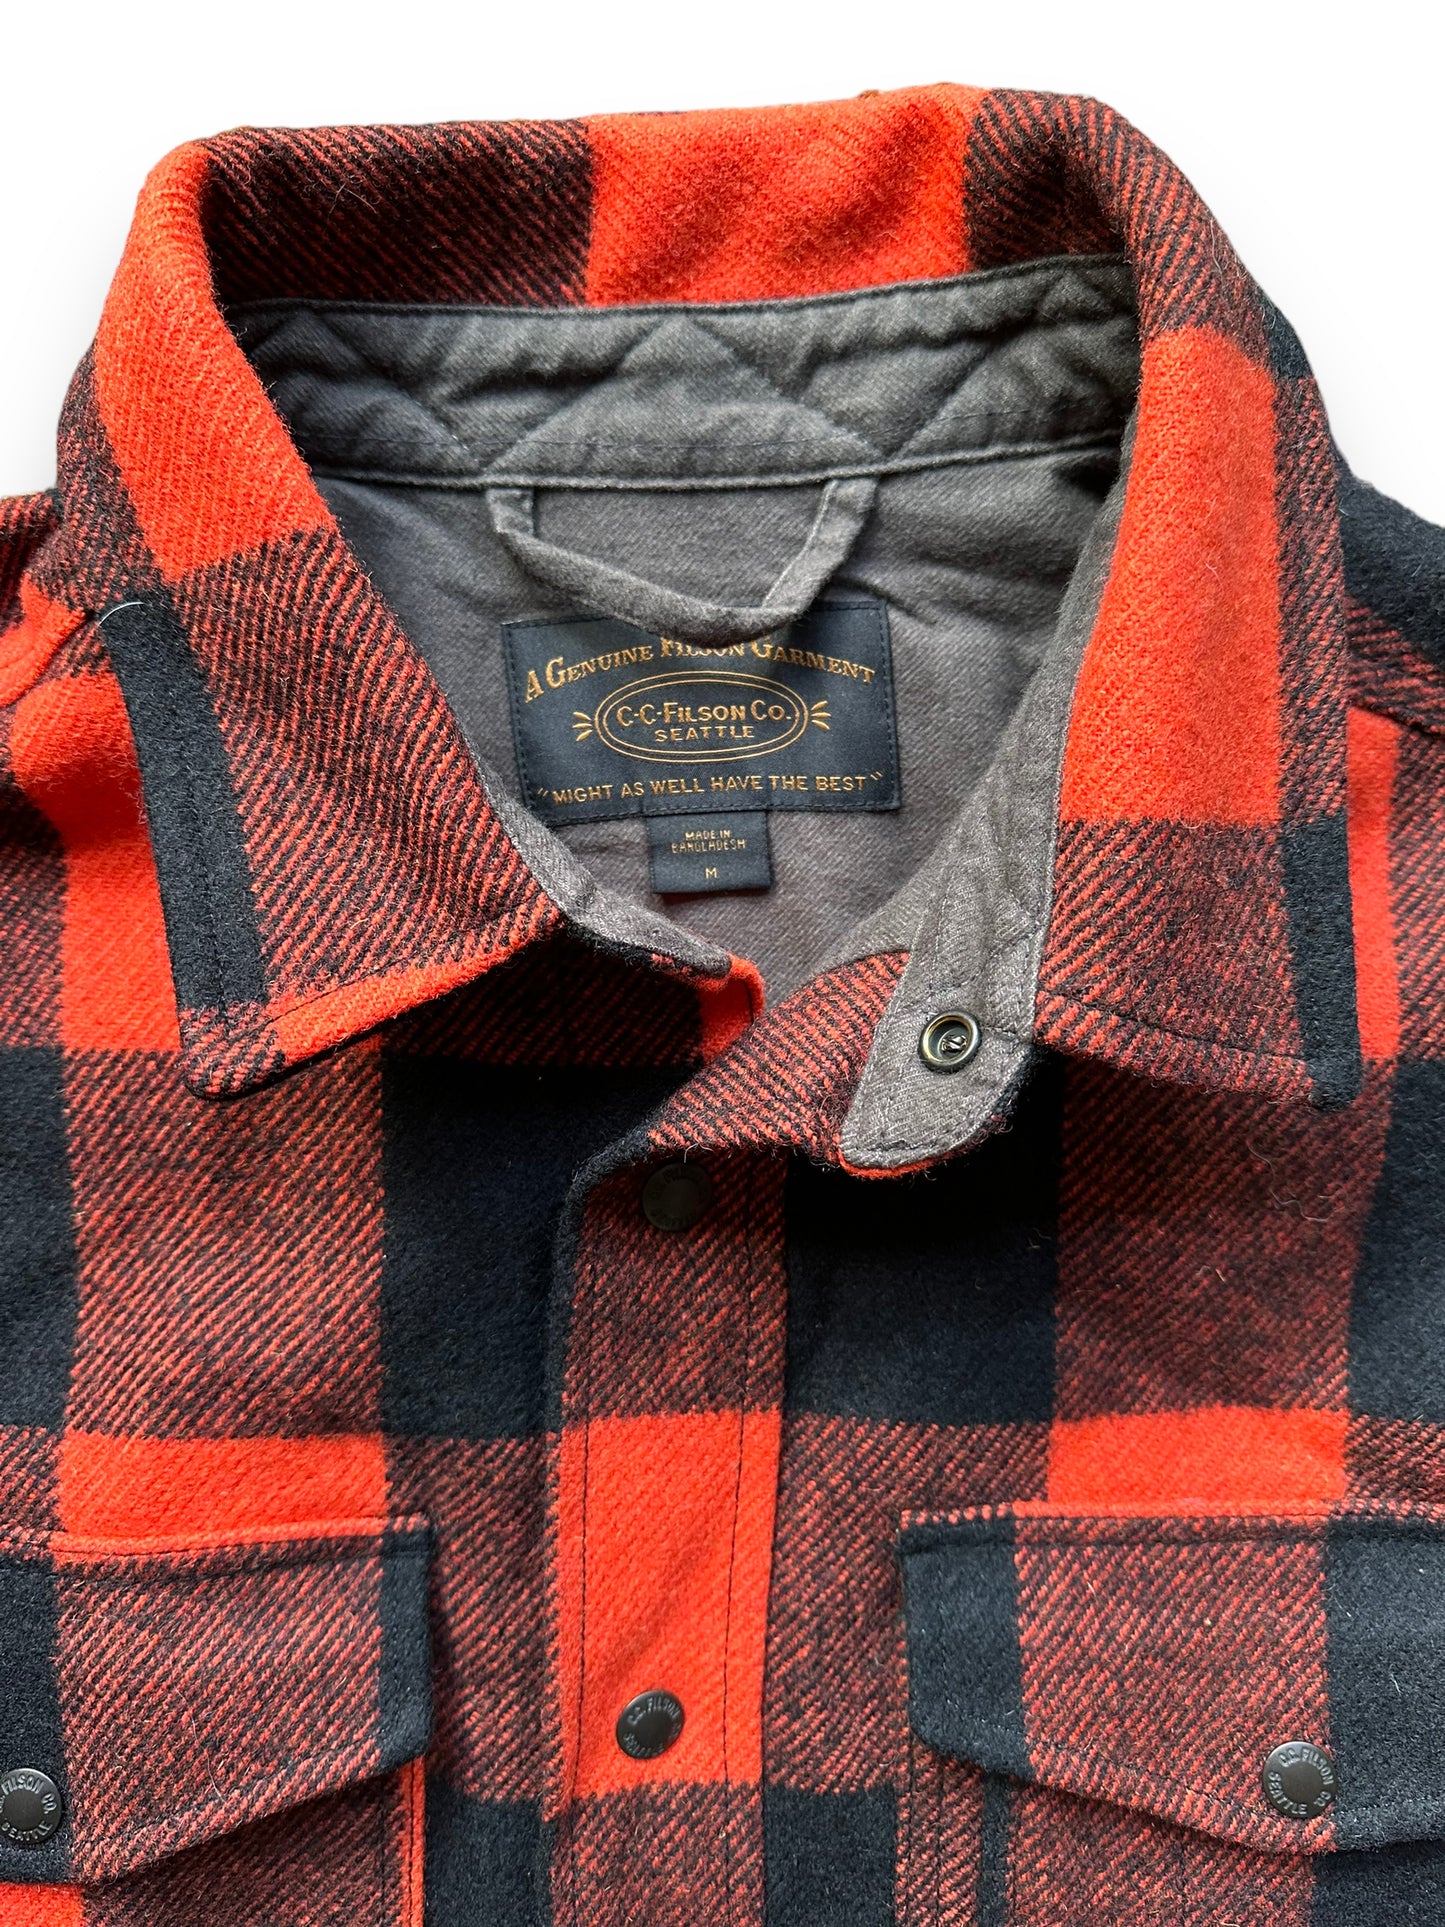 Tag View of Filson Black Blaze Mackinaw Lined Jac Shirt SZ M |  Barn Owl Vintage Goods | Vintage Filson Workwear Seattle